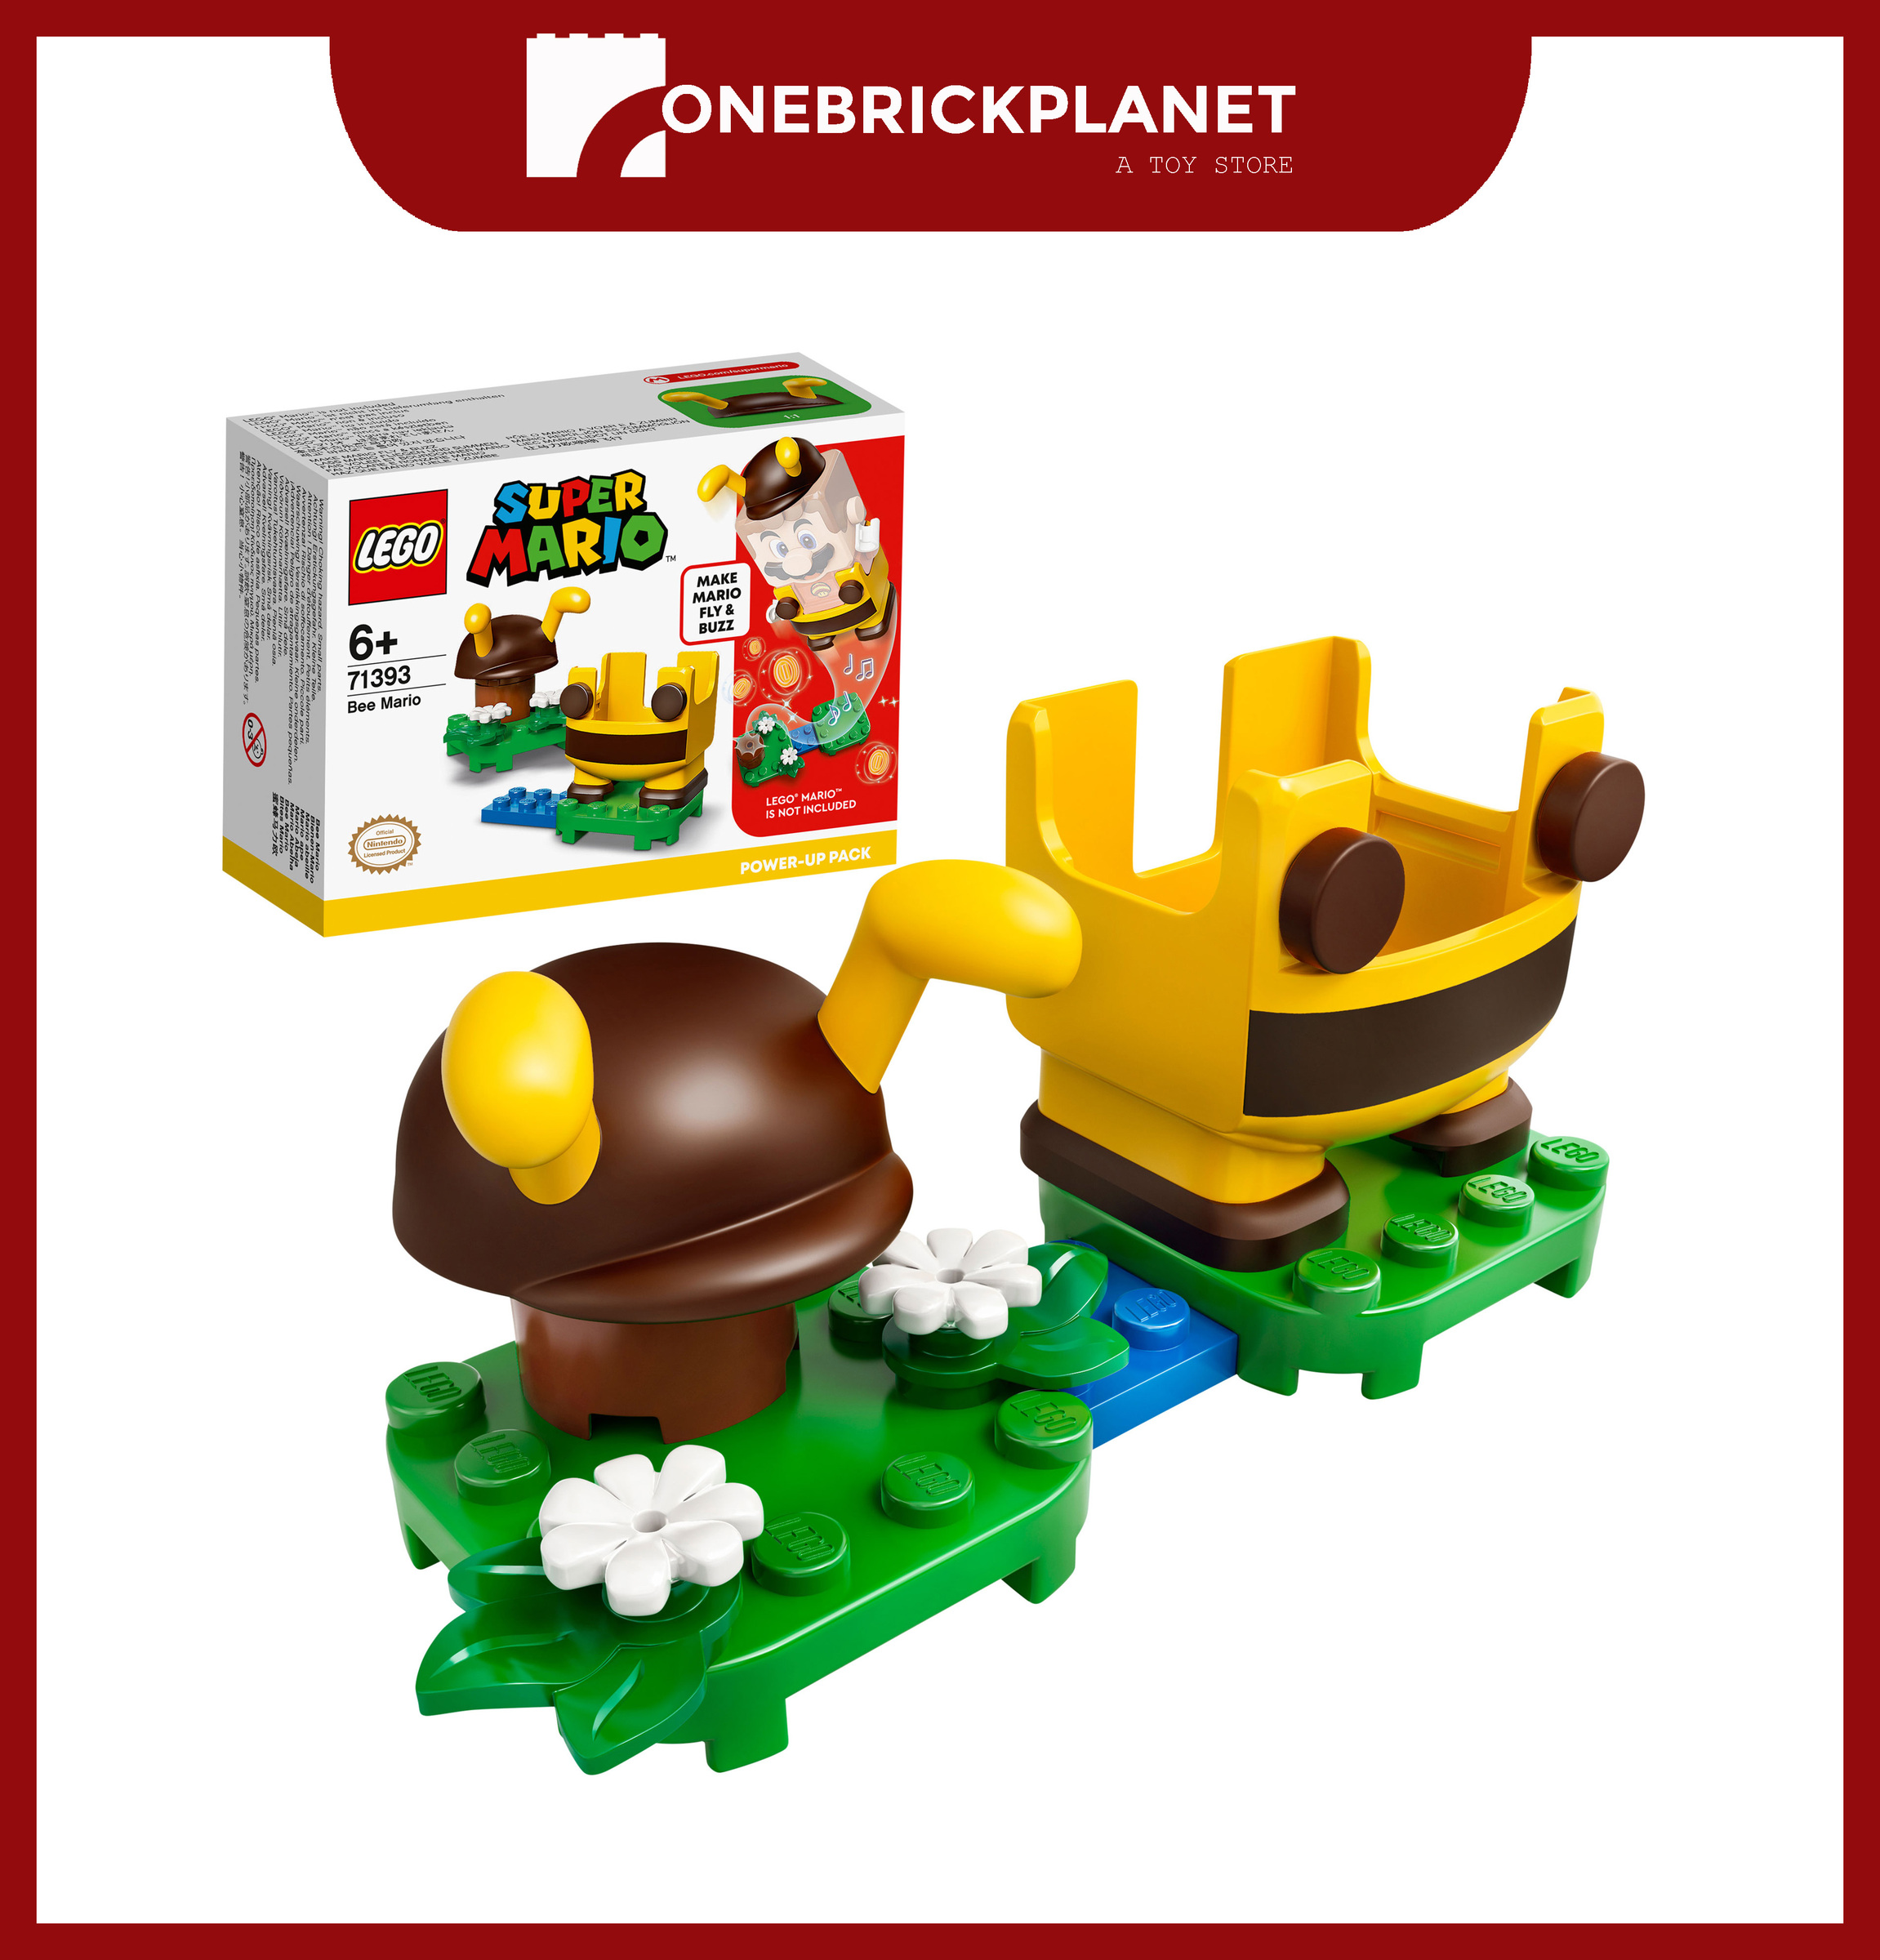 LEGO Super Mario 71393 - Bee Mario Power-Up Pack – One Brick Planet